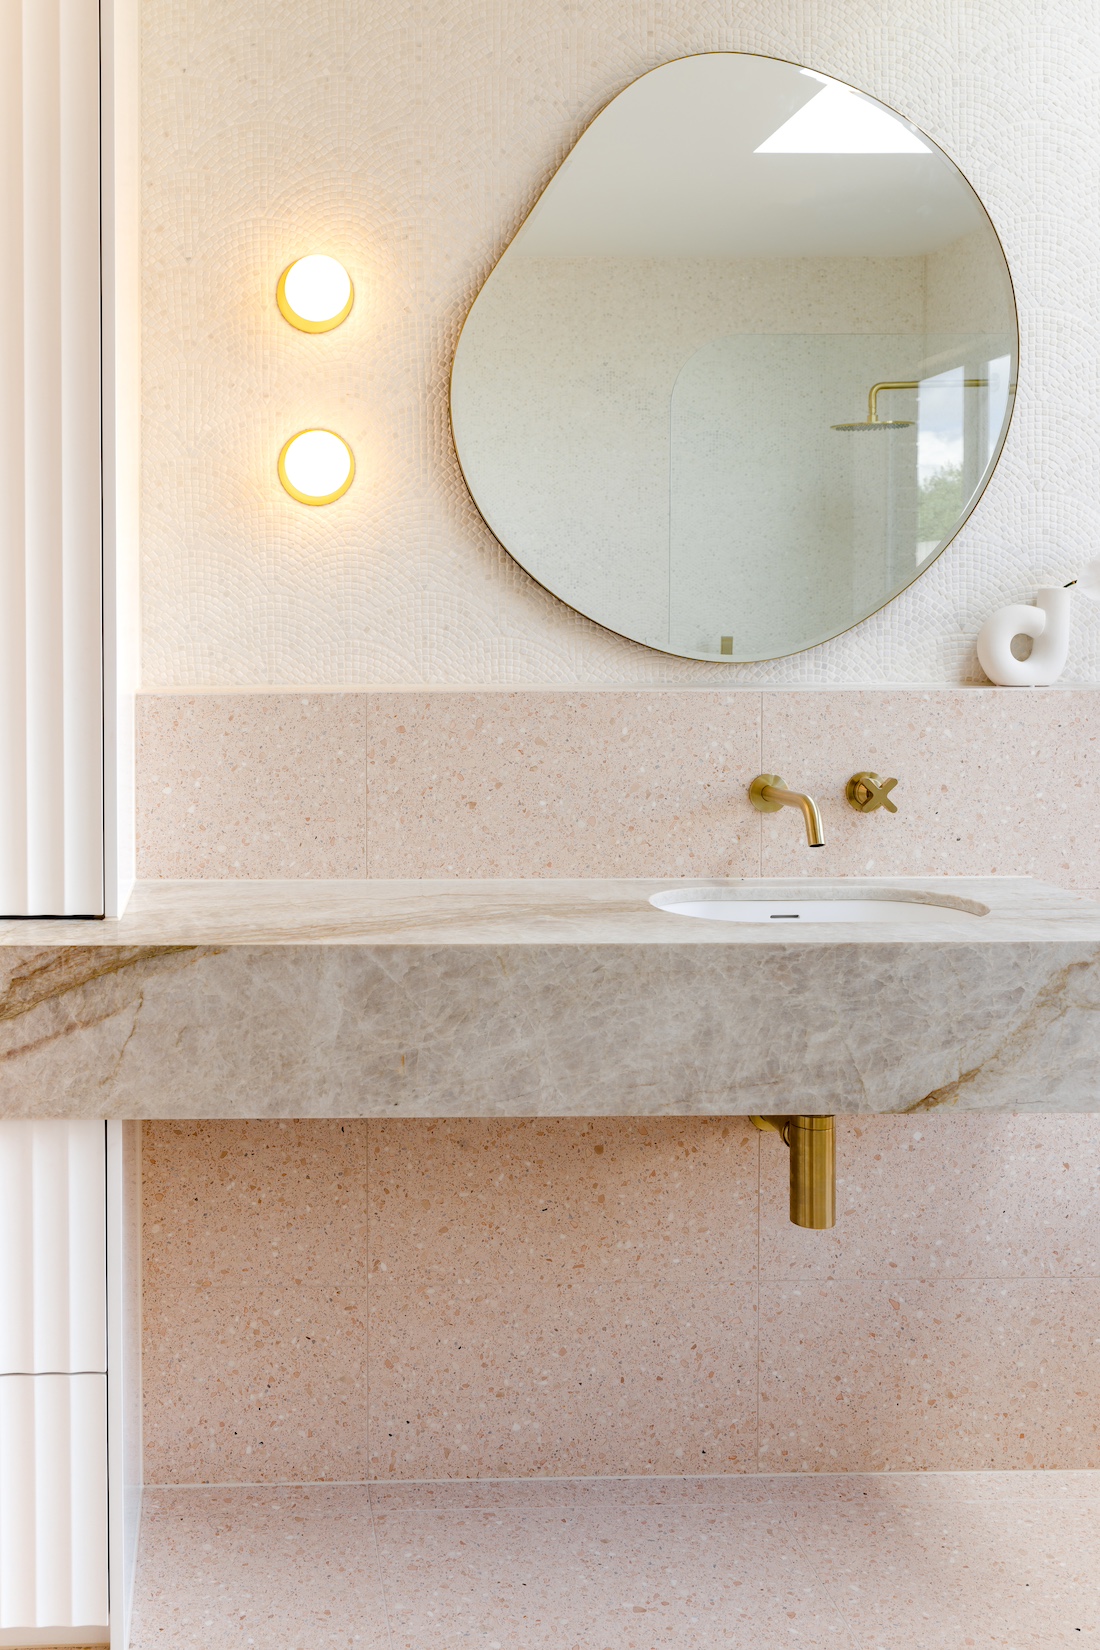 House of Harvee bathroom renovation - quartz vanity and organic mirror